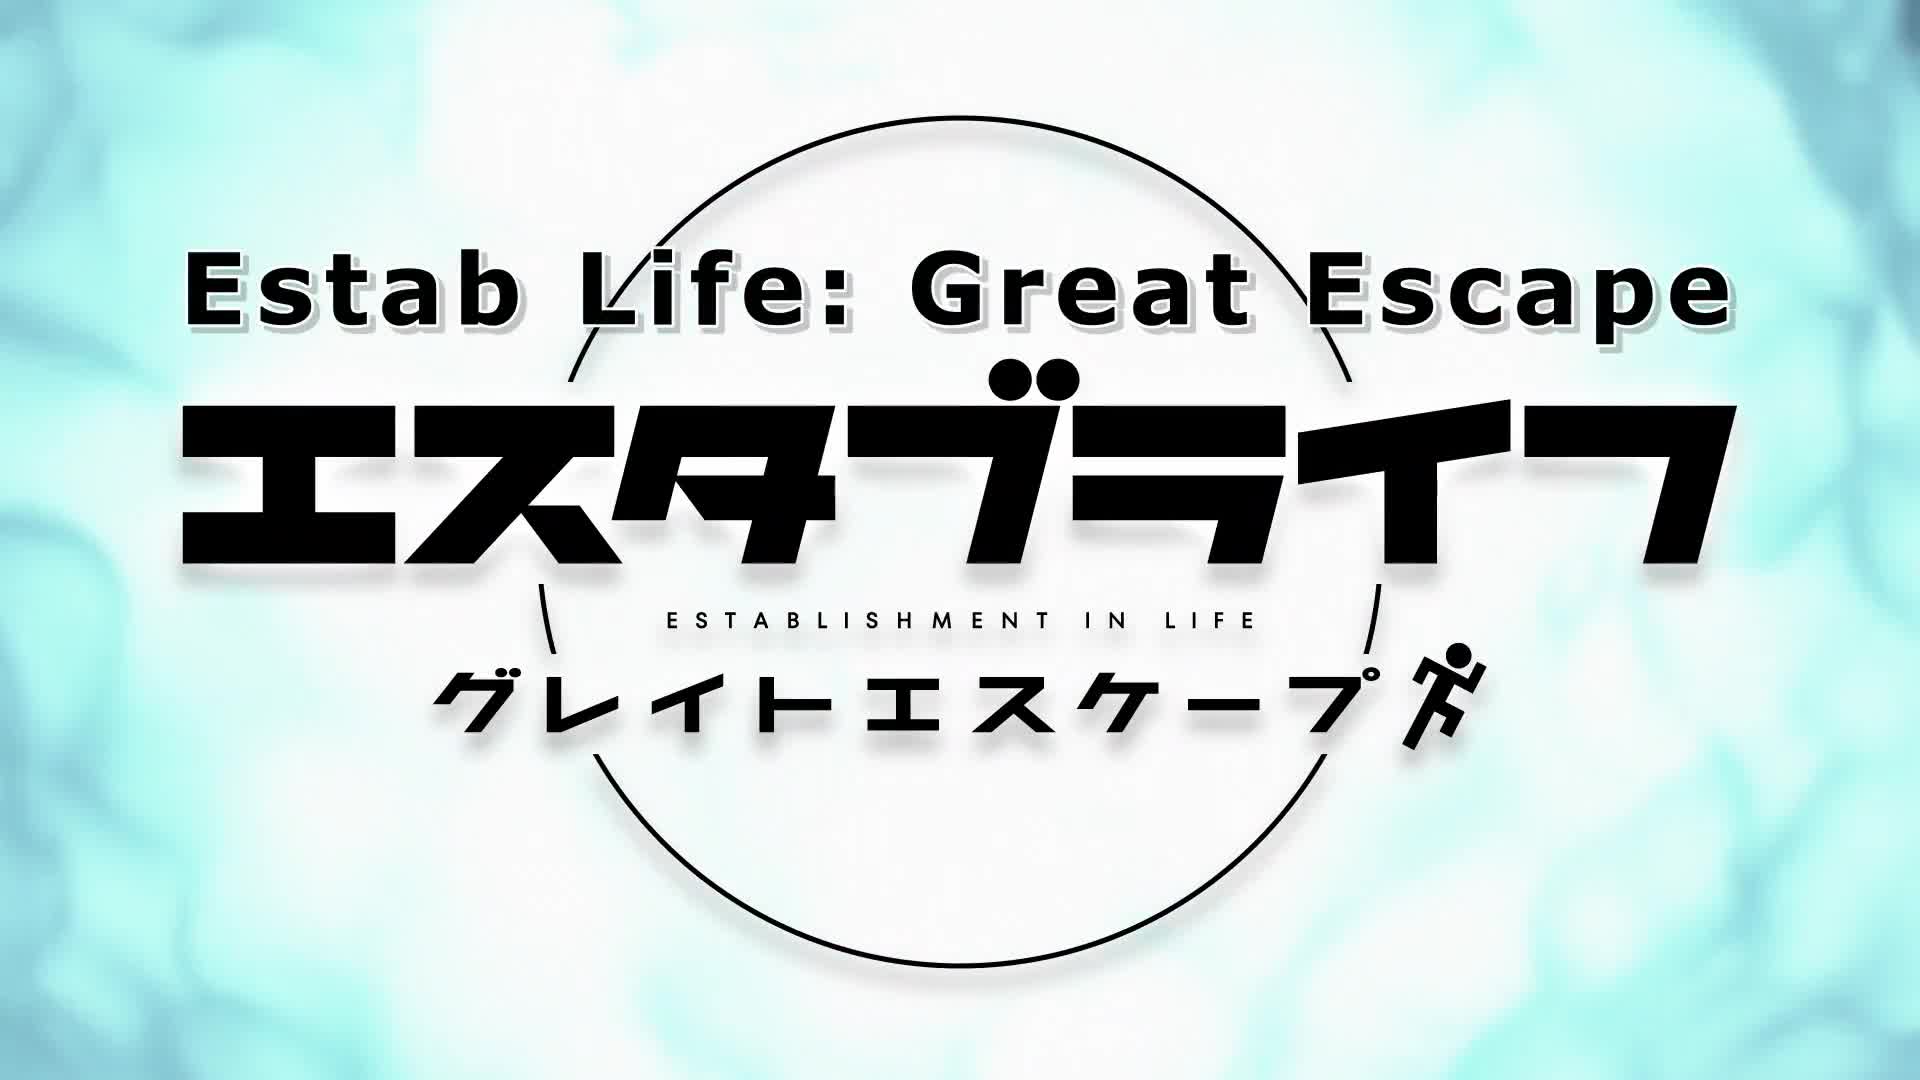 Estab-Life: Great Escape